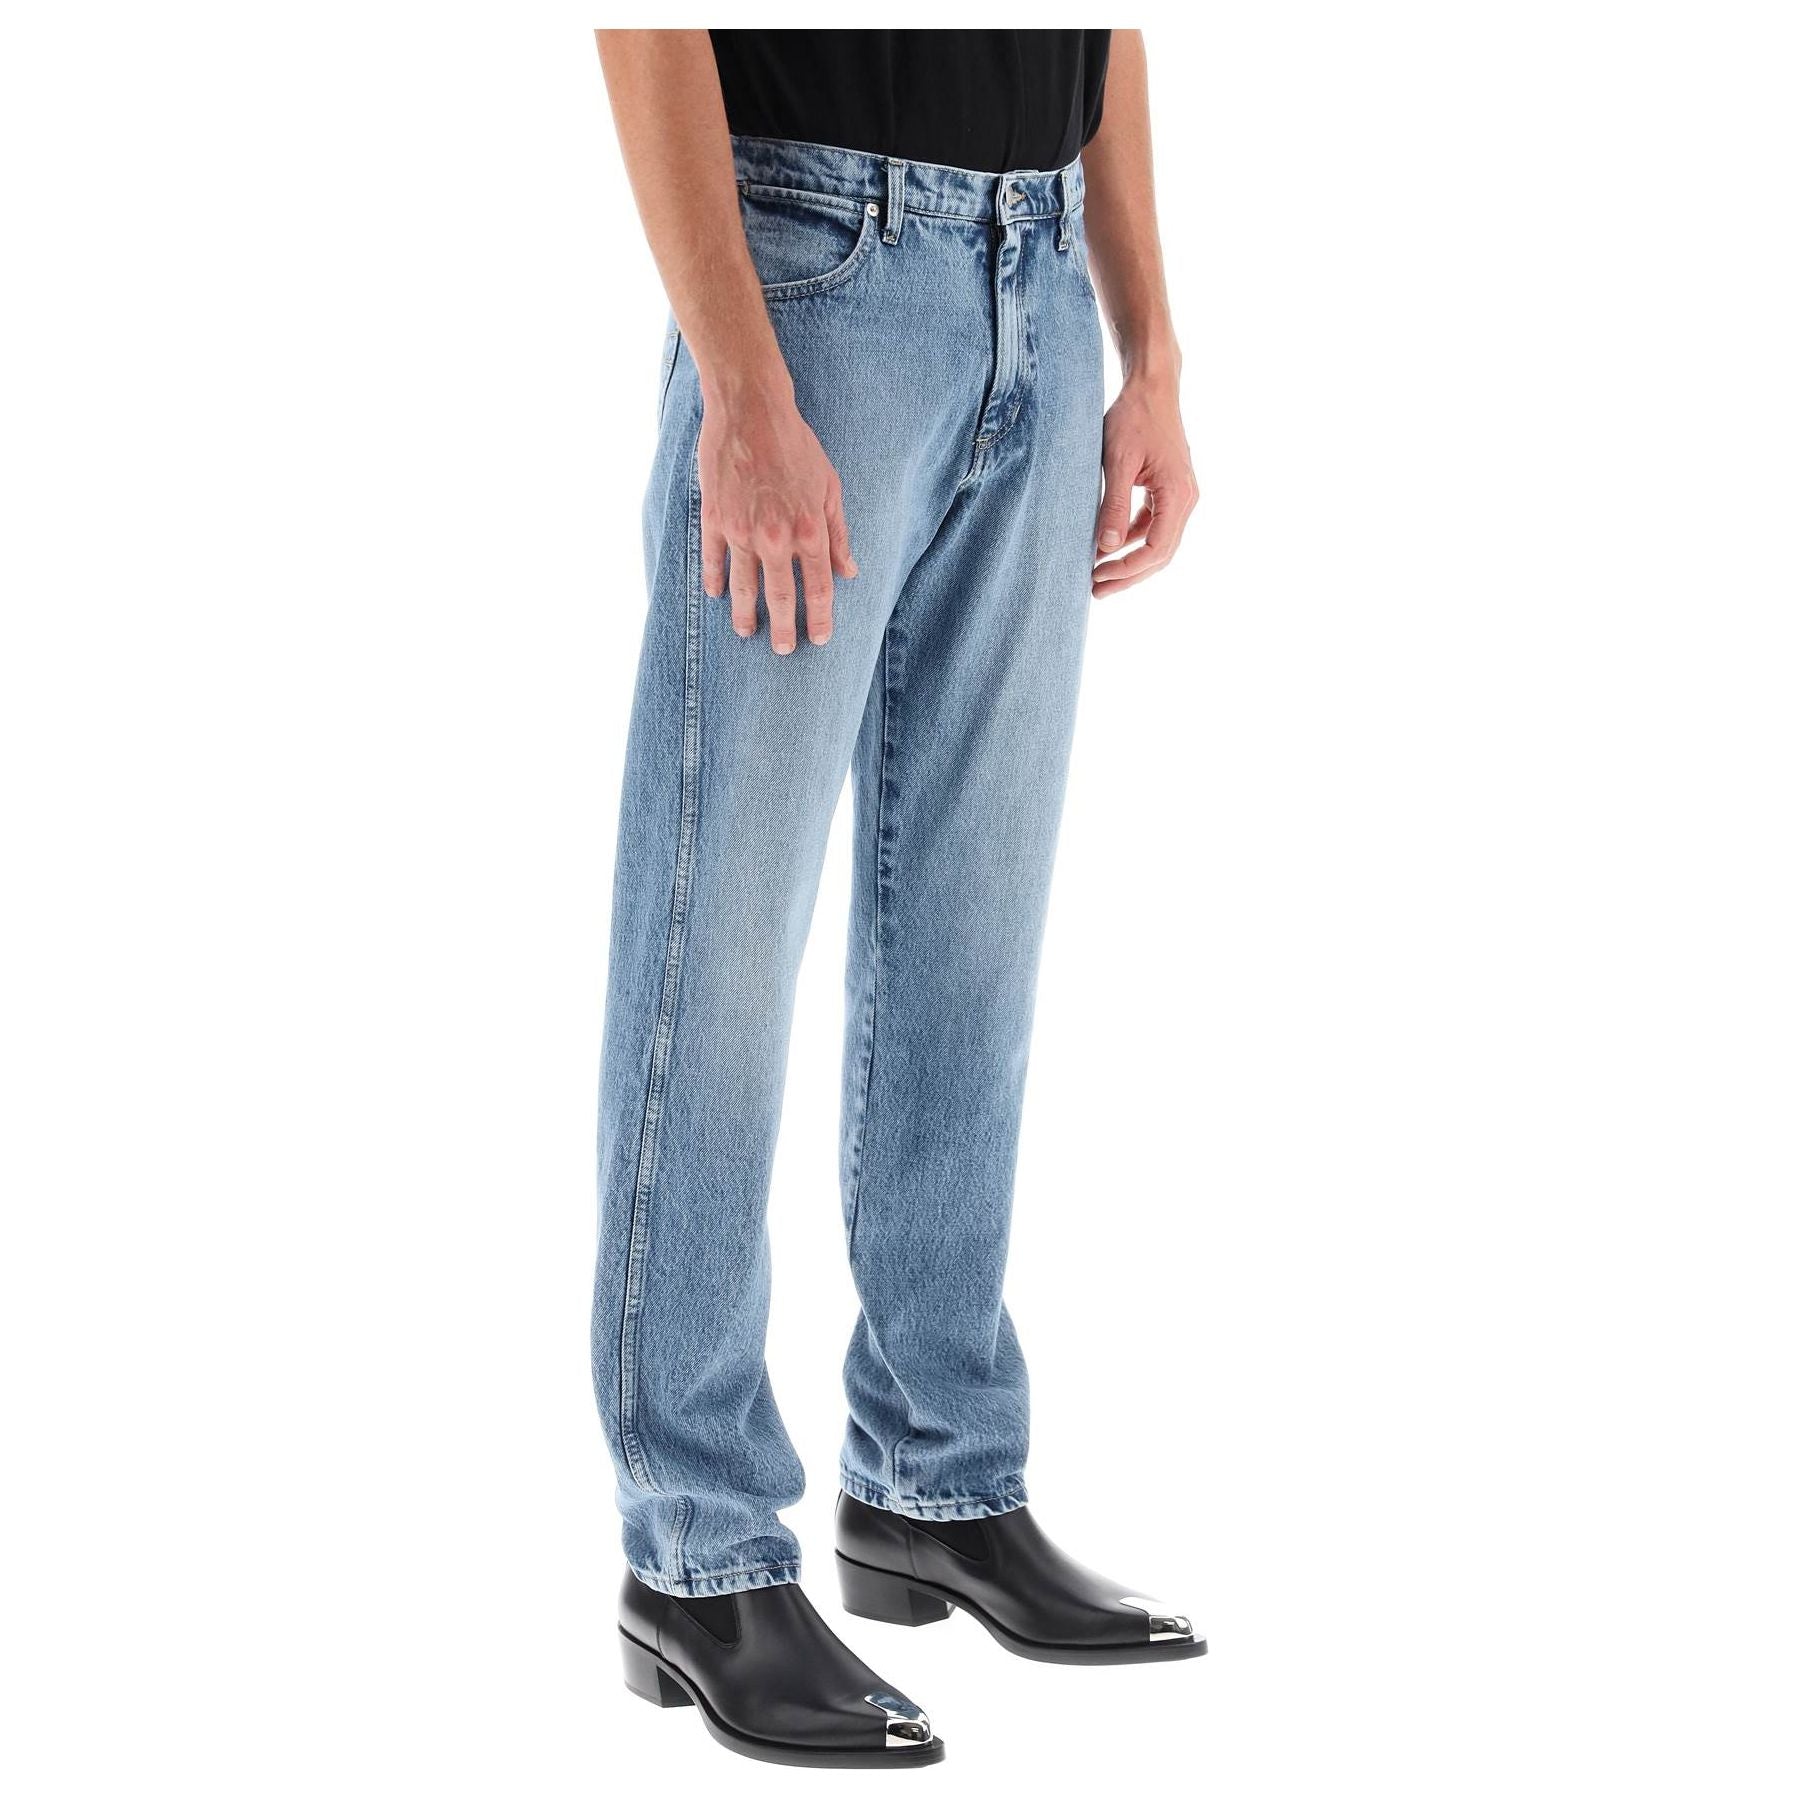 Straight Cut Jeans